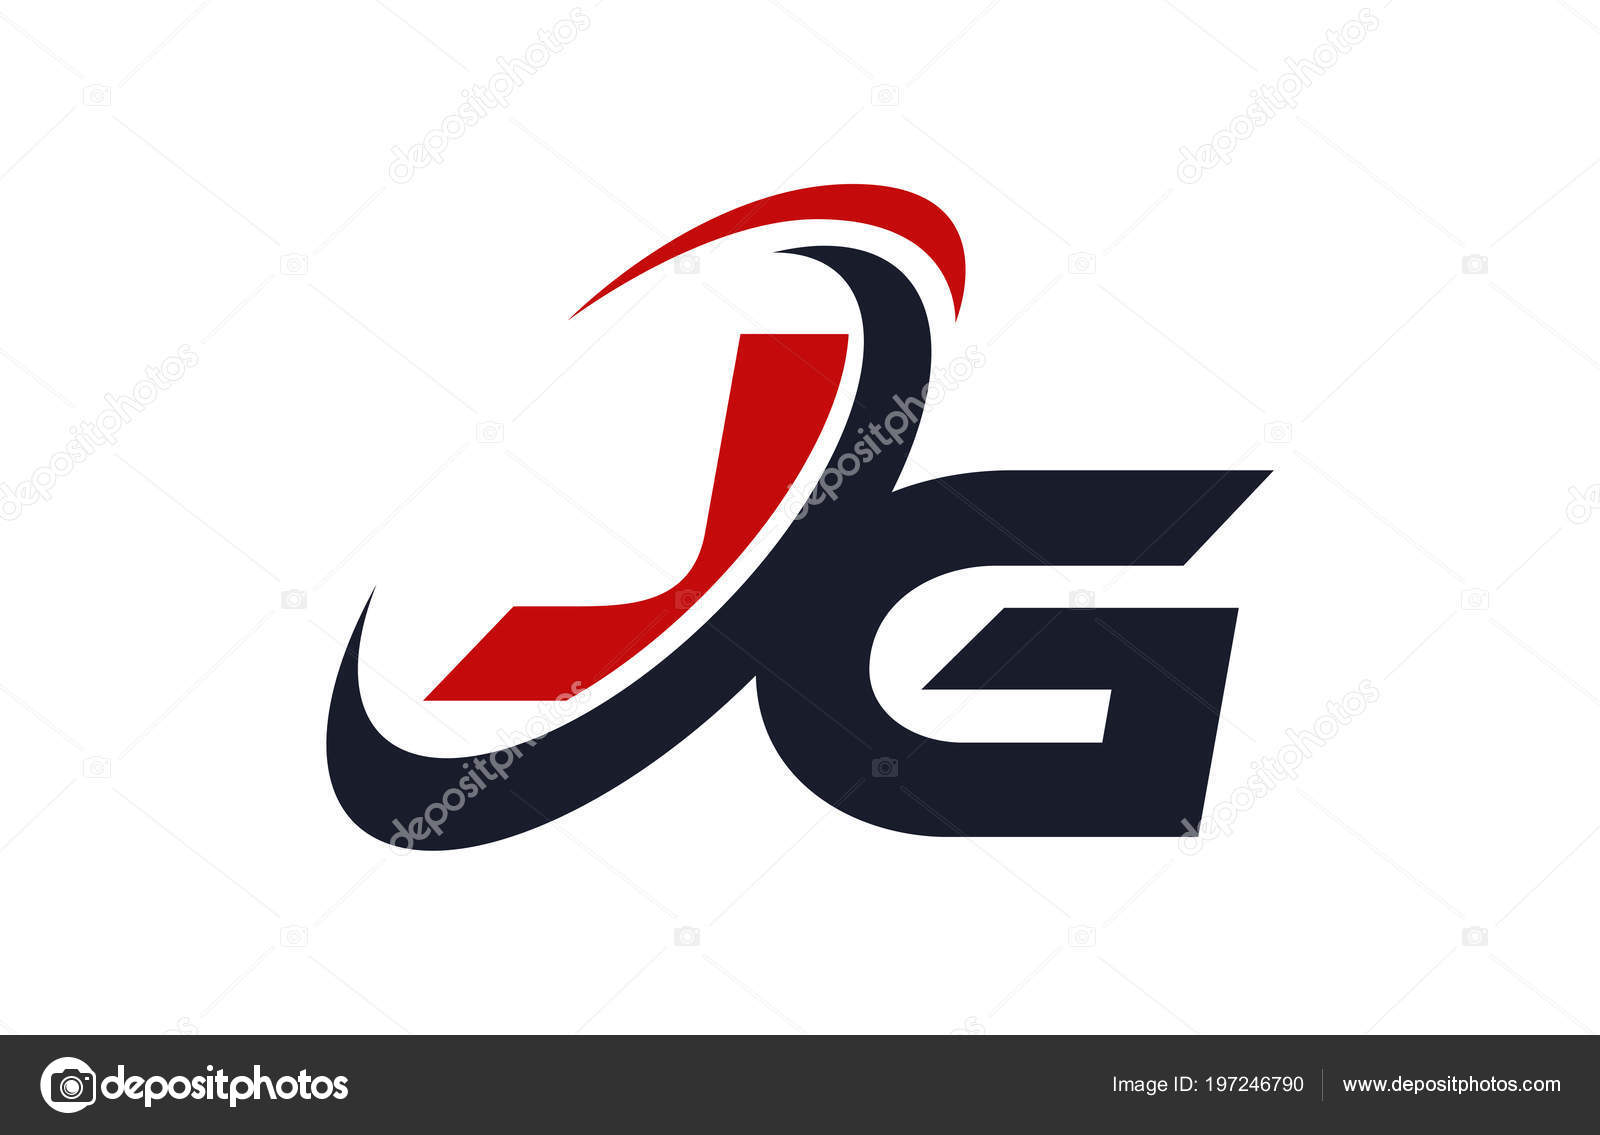 Jg Logo Images Vectorielles Jg Logo Vecteurs Libres De Droits Depositphotos